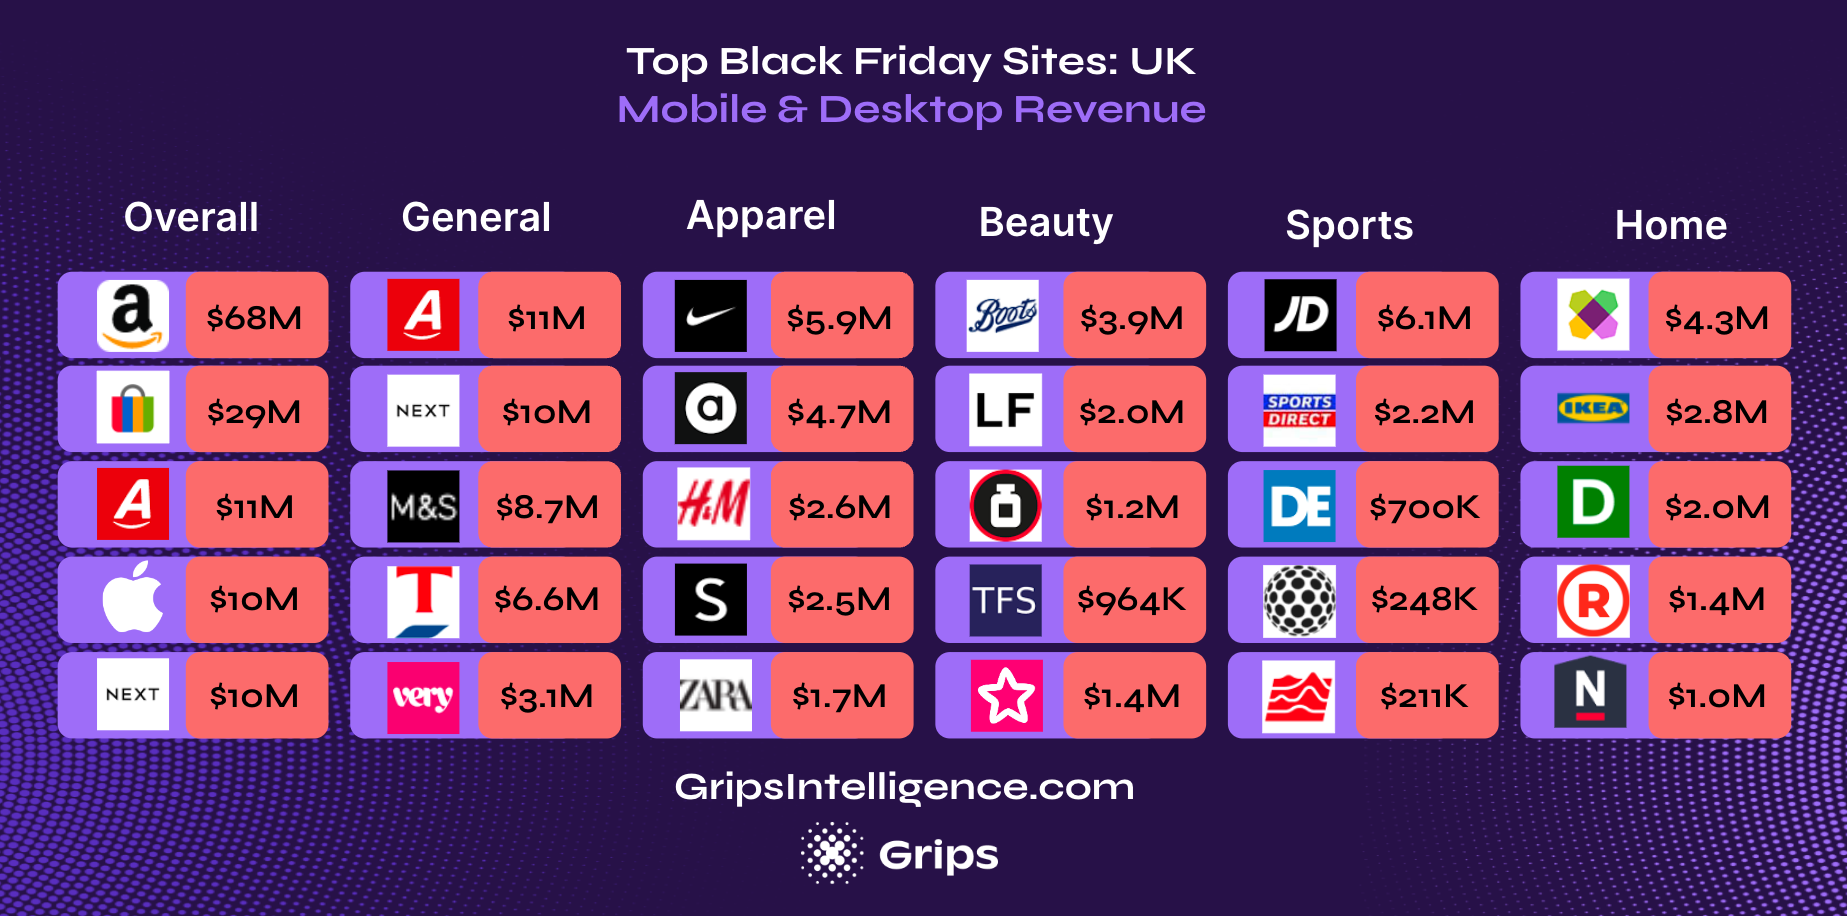 Top Black Friday e-commerce sites UK